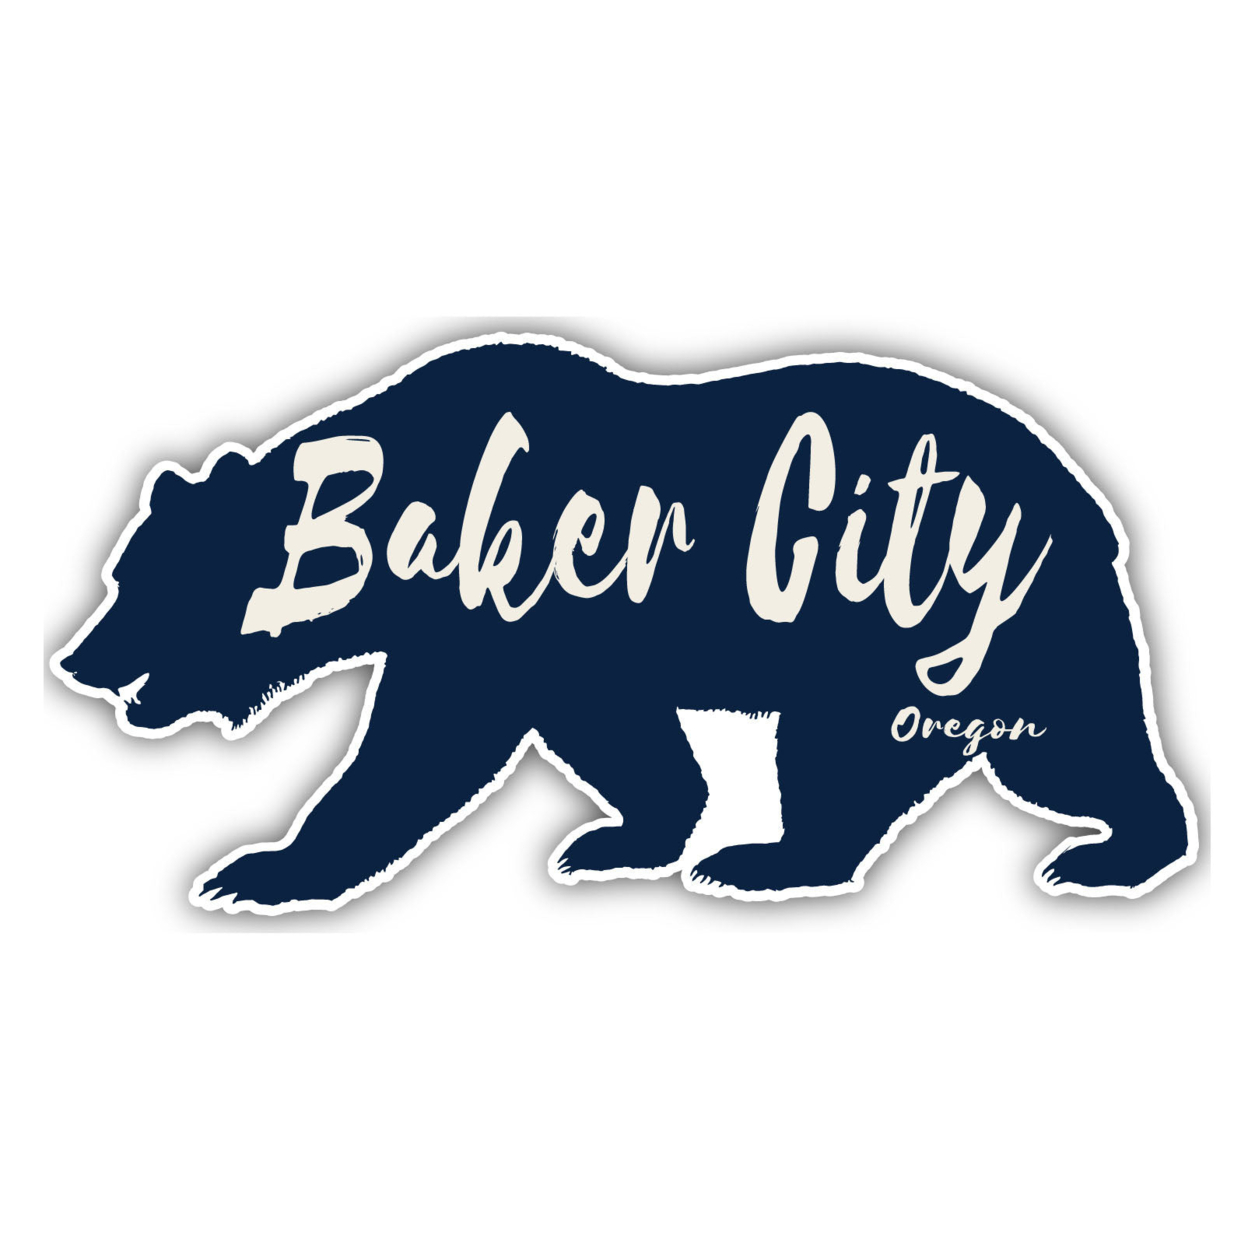 Baker City Oregon Souvenir Decorative Stickers (Choose Theme And Size) - Single Unit, 4-Inch, Adventures Awaits